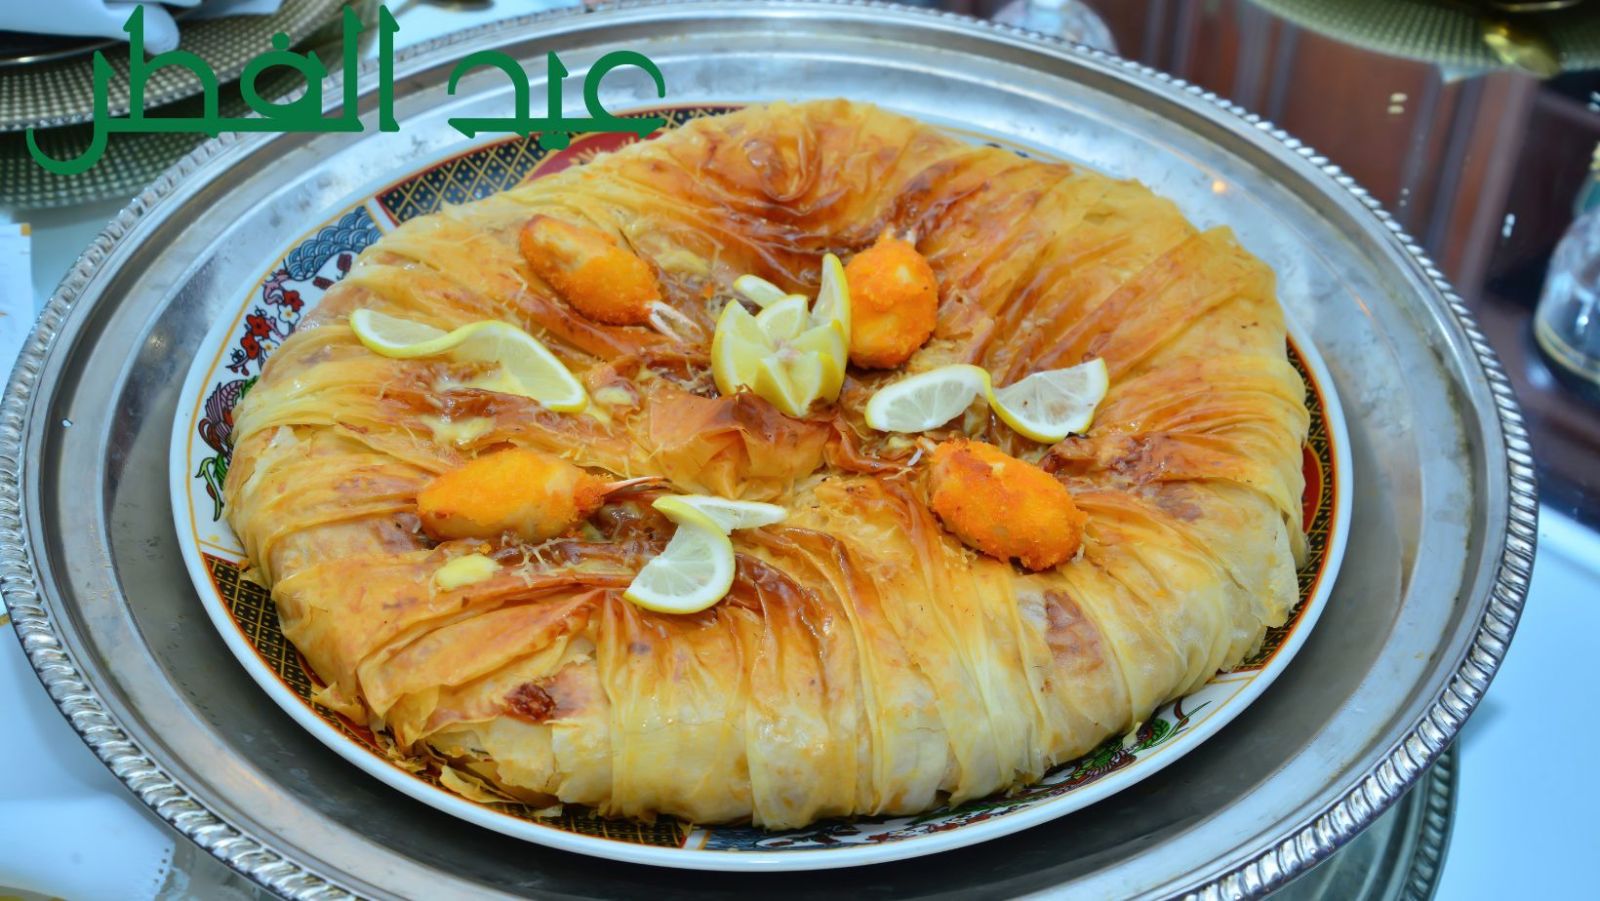 Pastilla aux fruits de mer pour l'Aïd-el-Fitr : un trésor culinaire et spirituel